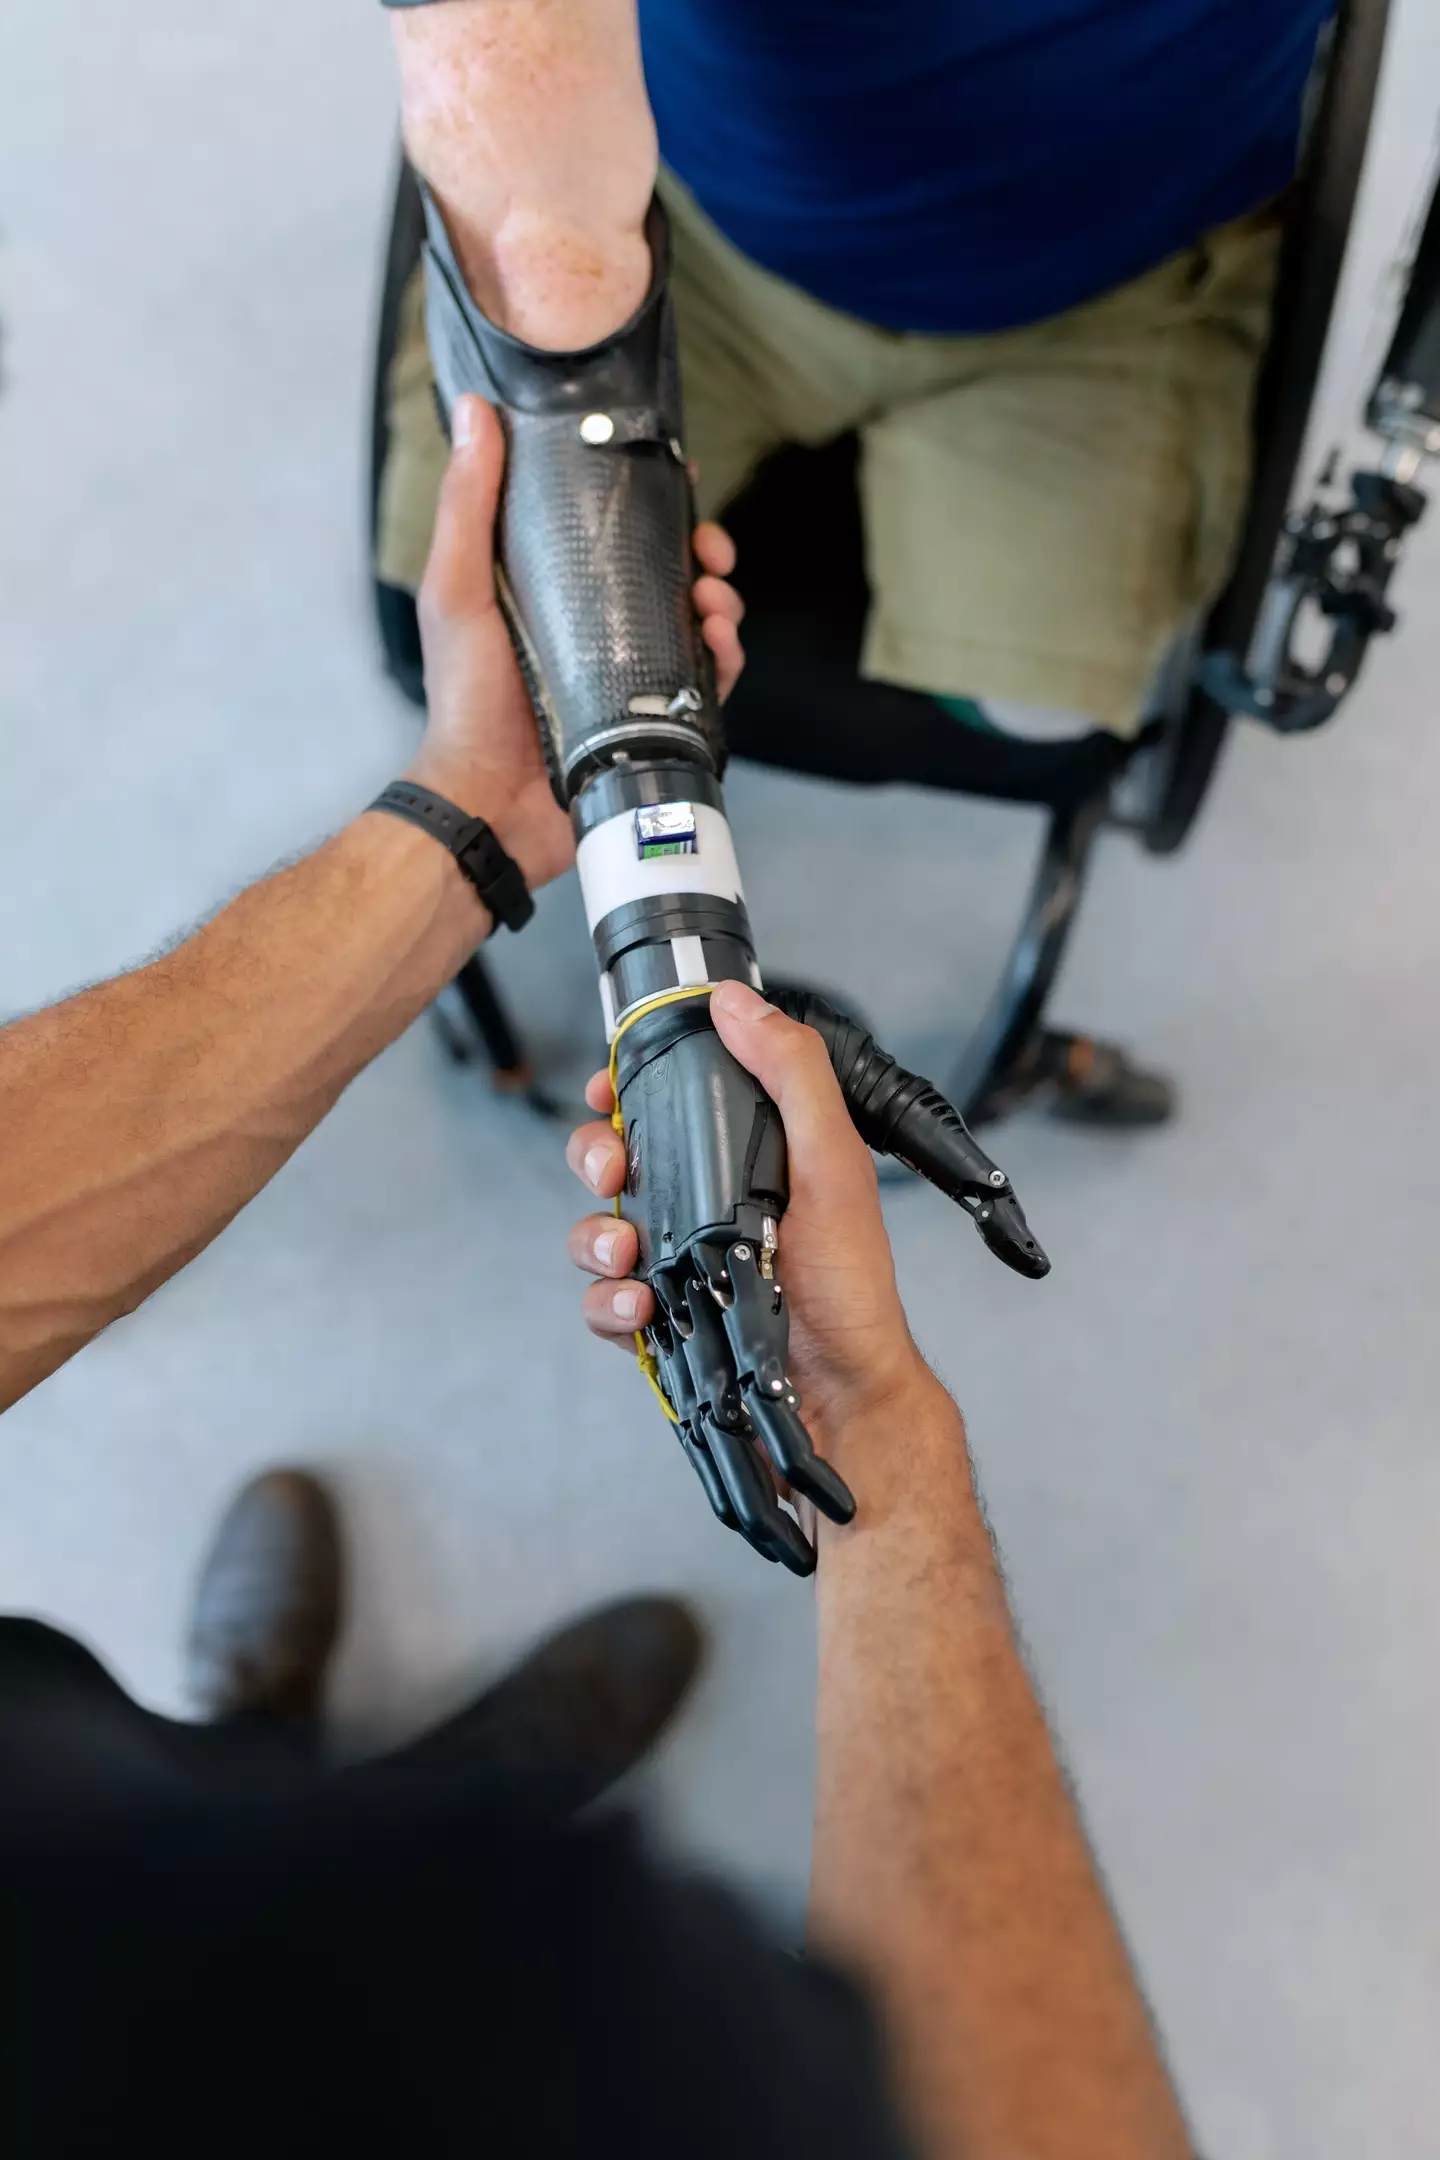 Examples of a BCI include a robotic limb.